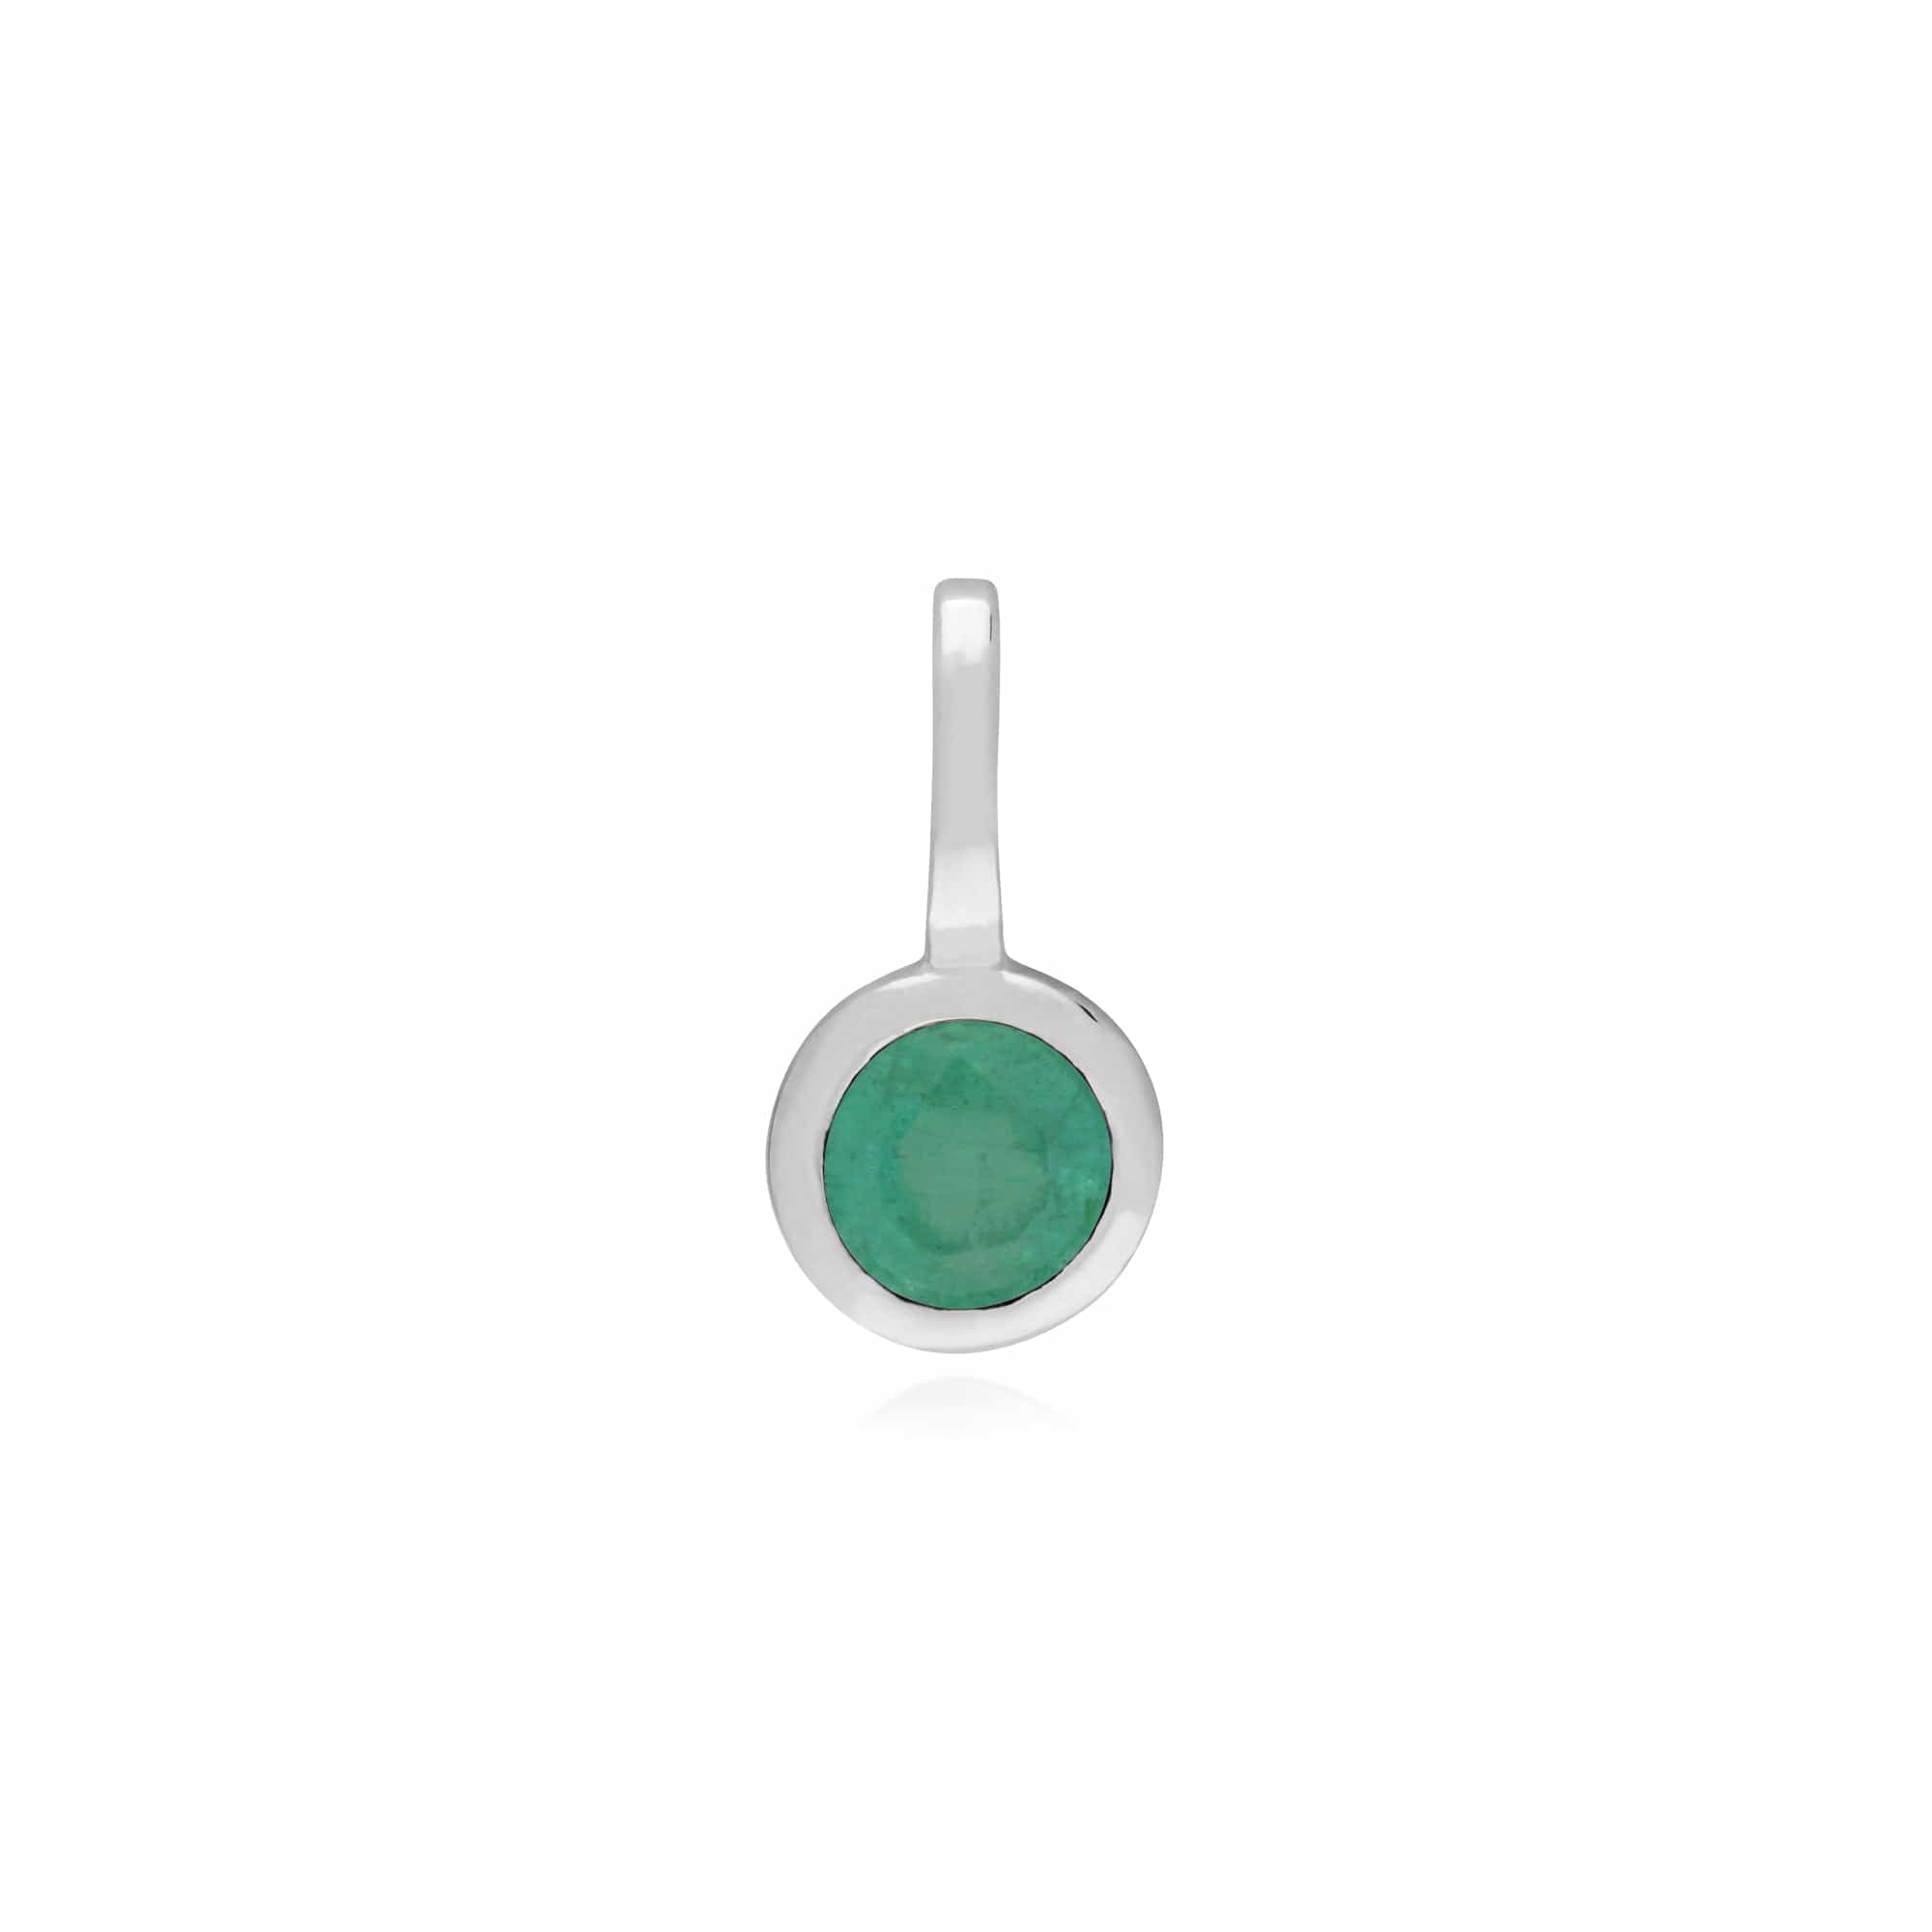 270P027602925-270P026601925 Classic Swirl Heart Lock Pendant & Emerald Charm in 925 Sterling Silver 2